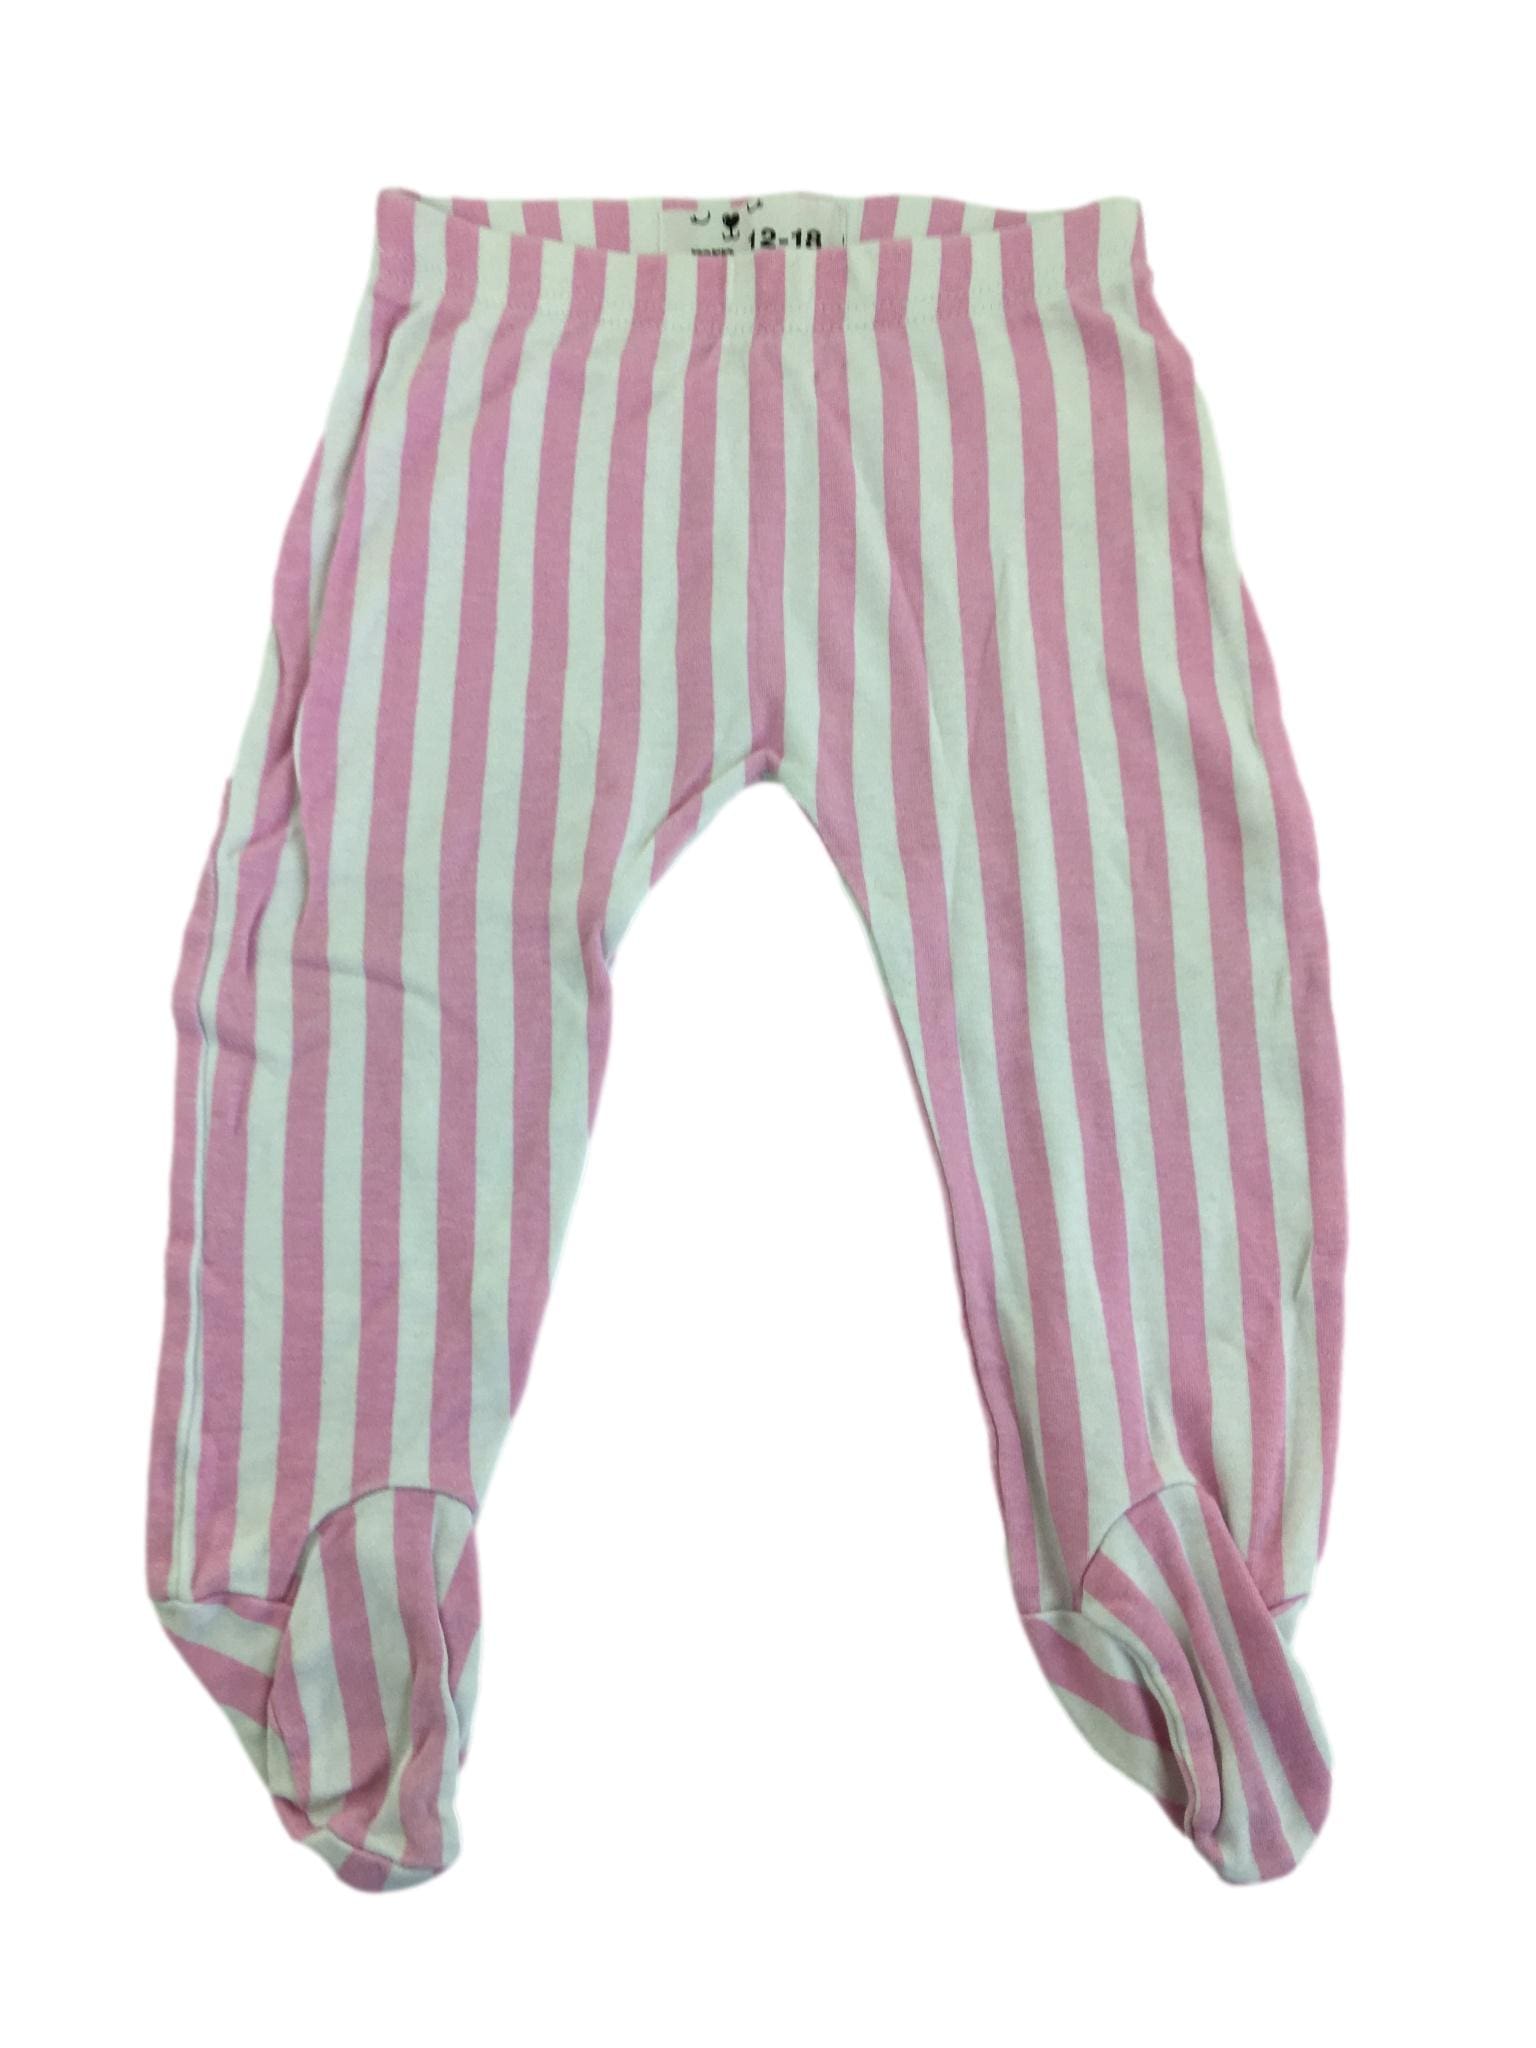 12-18M Pink & White Striped Footed Leggings - Mr Price - Petit Fox